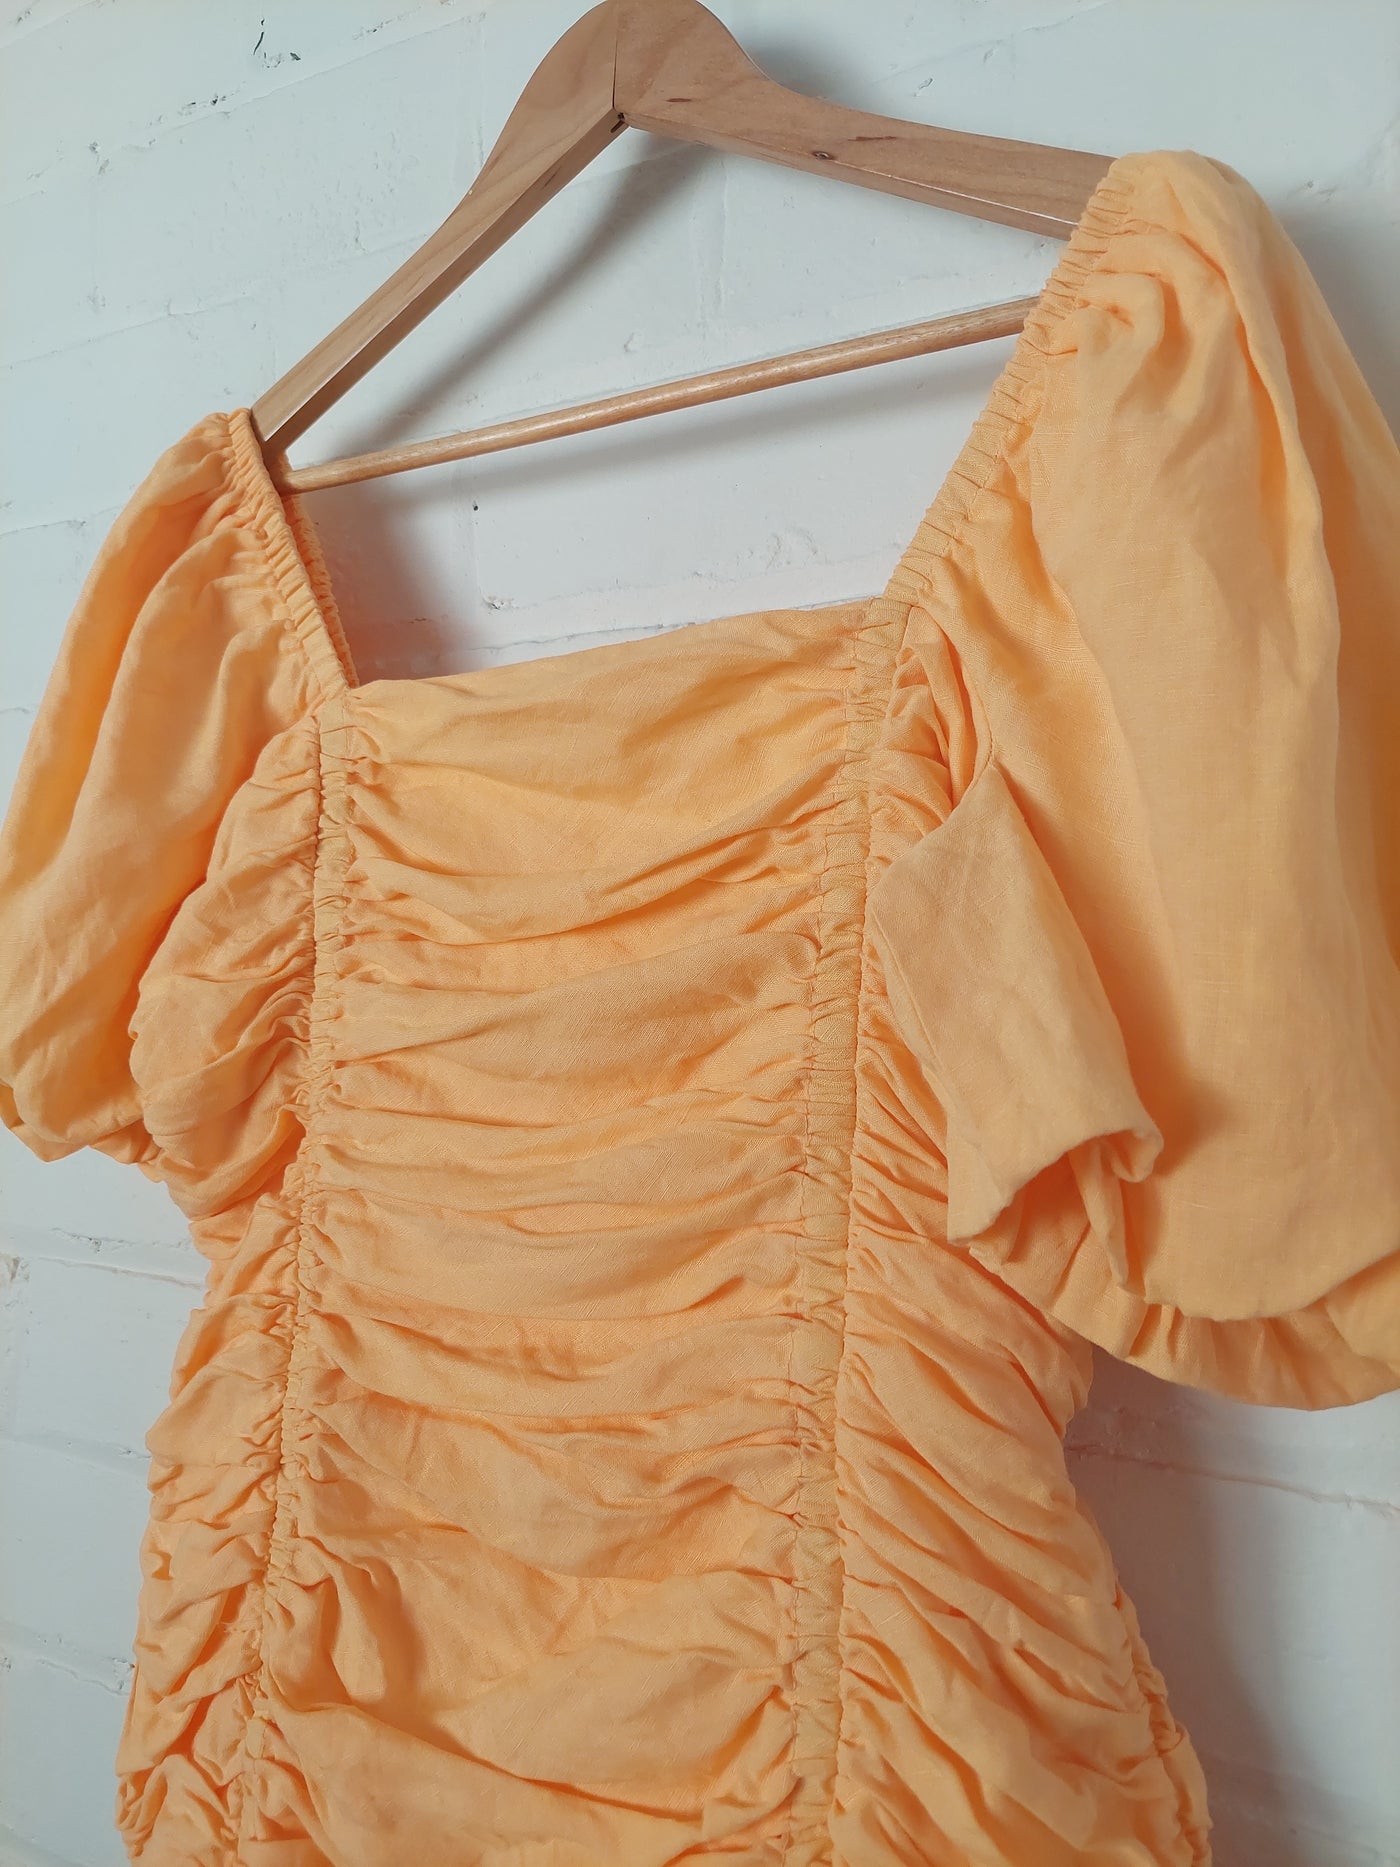 Bec & Bridge Jo Jo Ruched Linen Mini Dress in Melon, Size 12